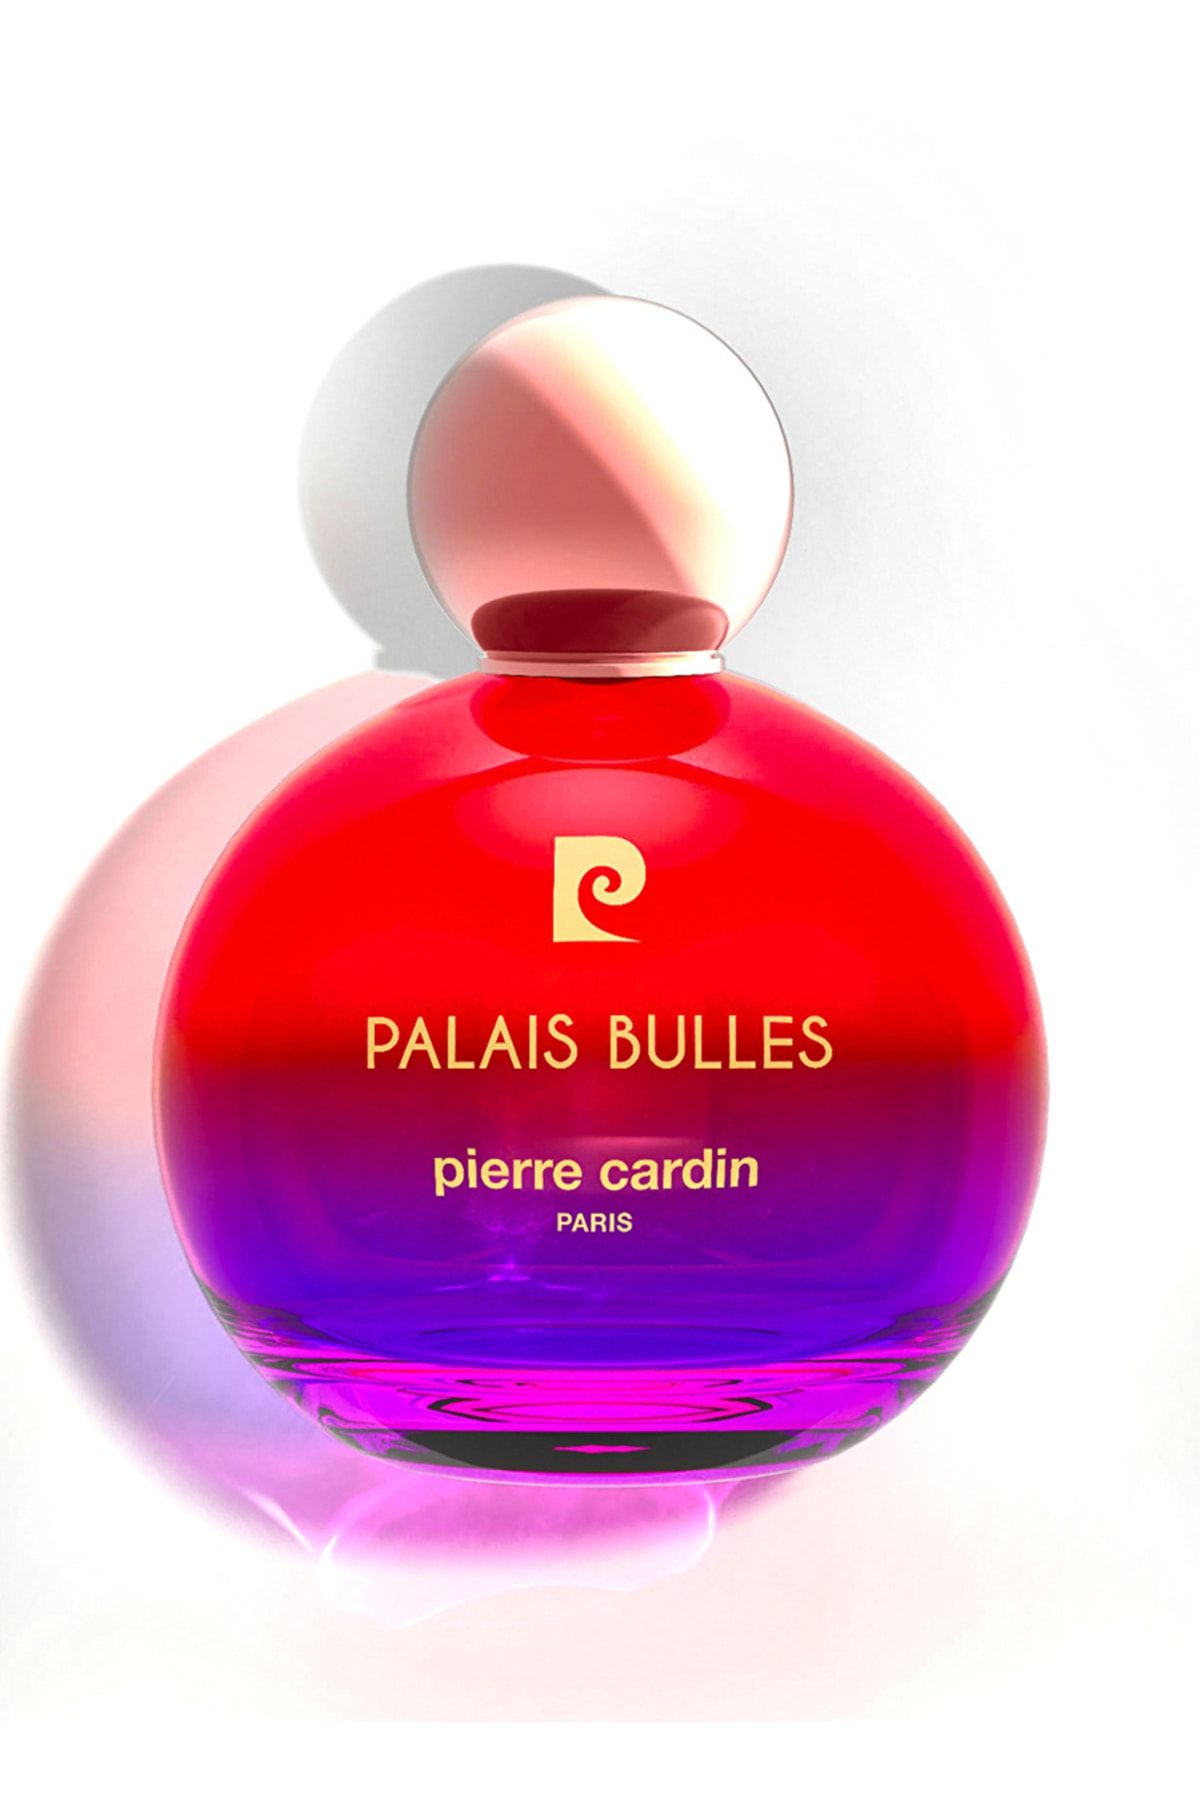 Pierre Cardin Palais Bulles ادوپرفیوم 100 ml عطر زنانه بادام سینامون توبروز